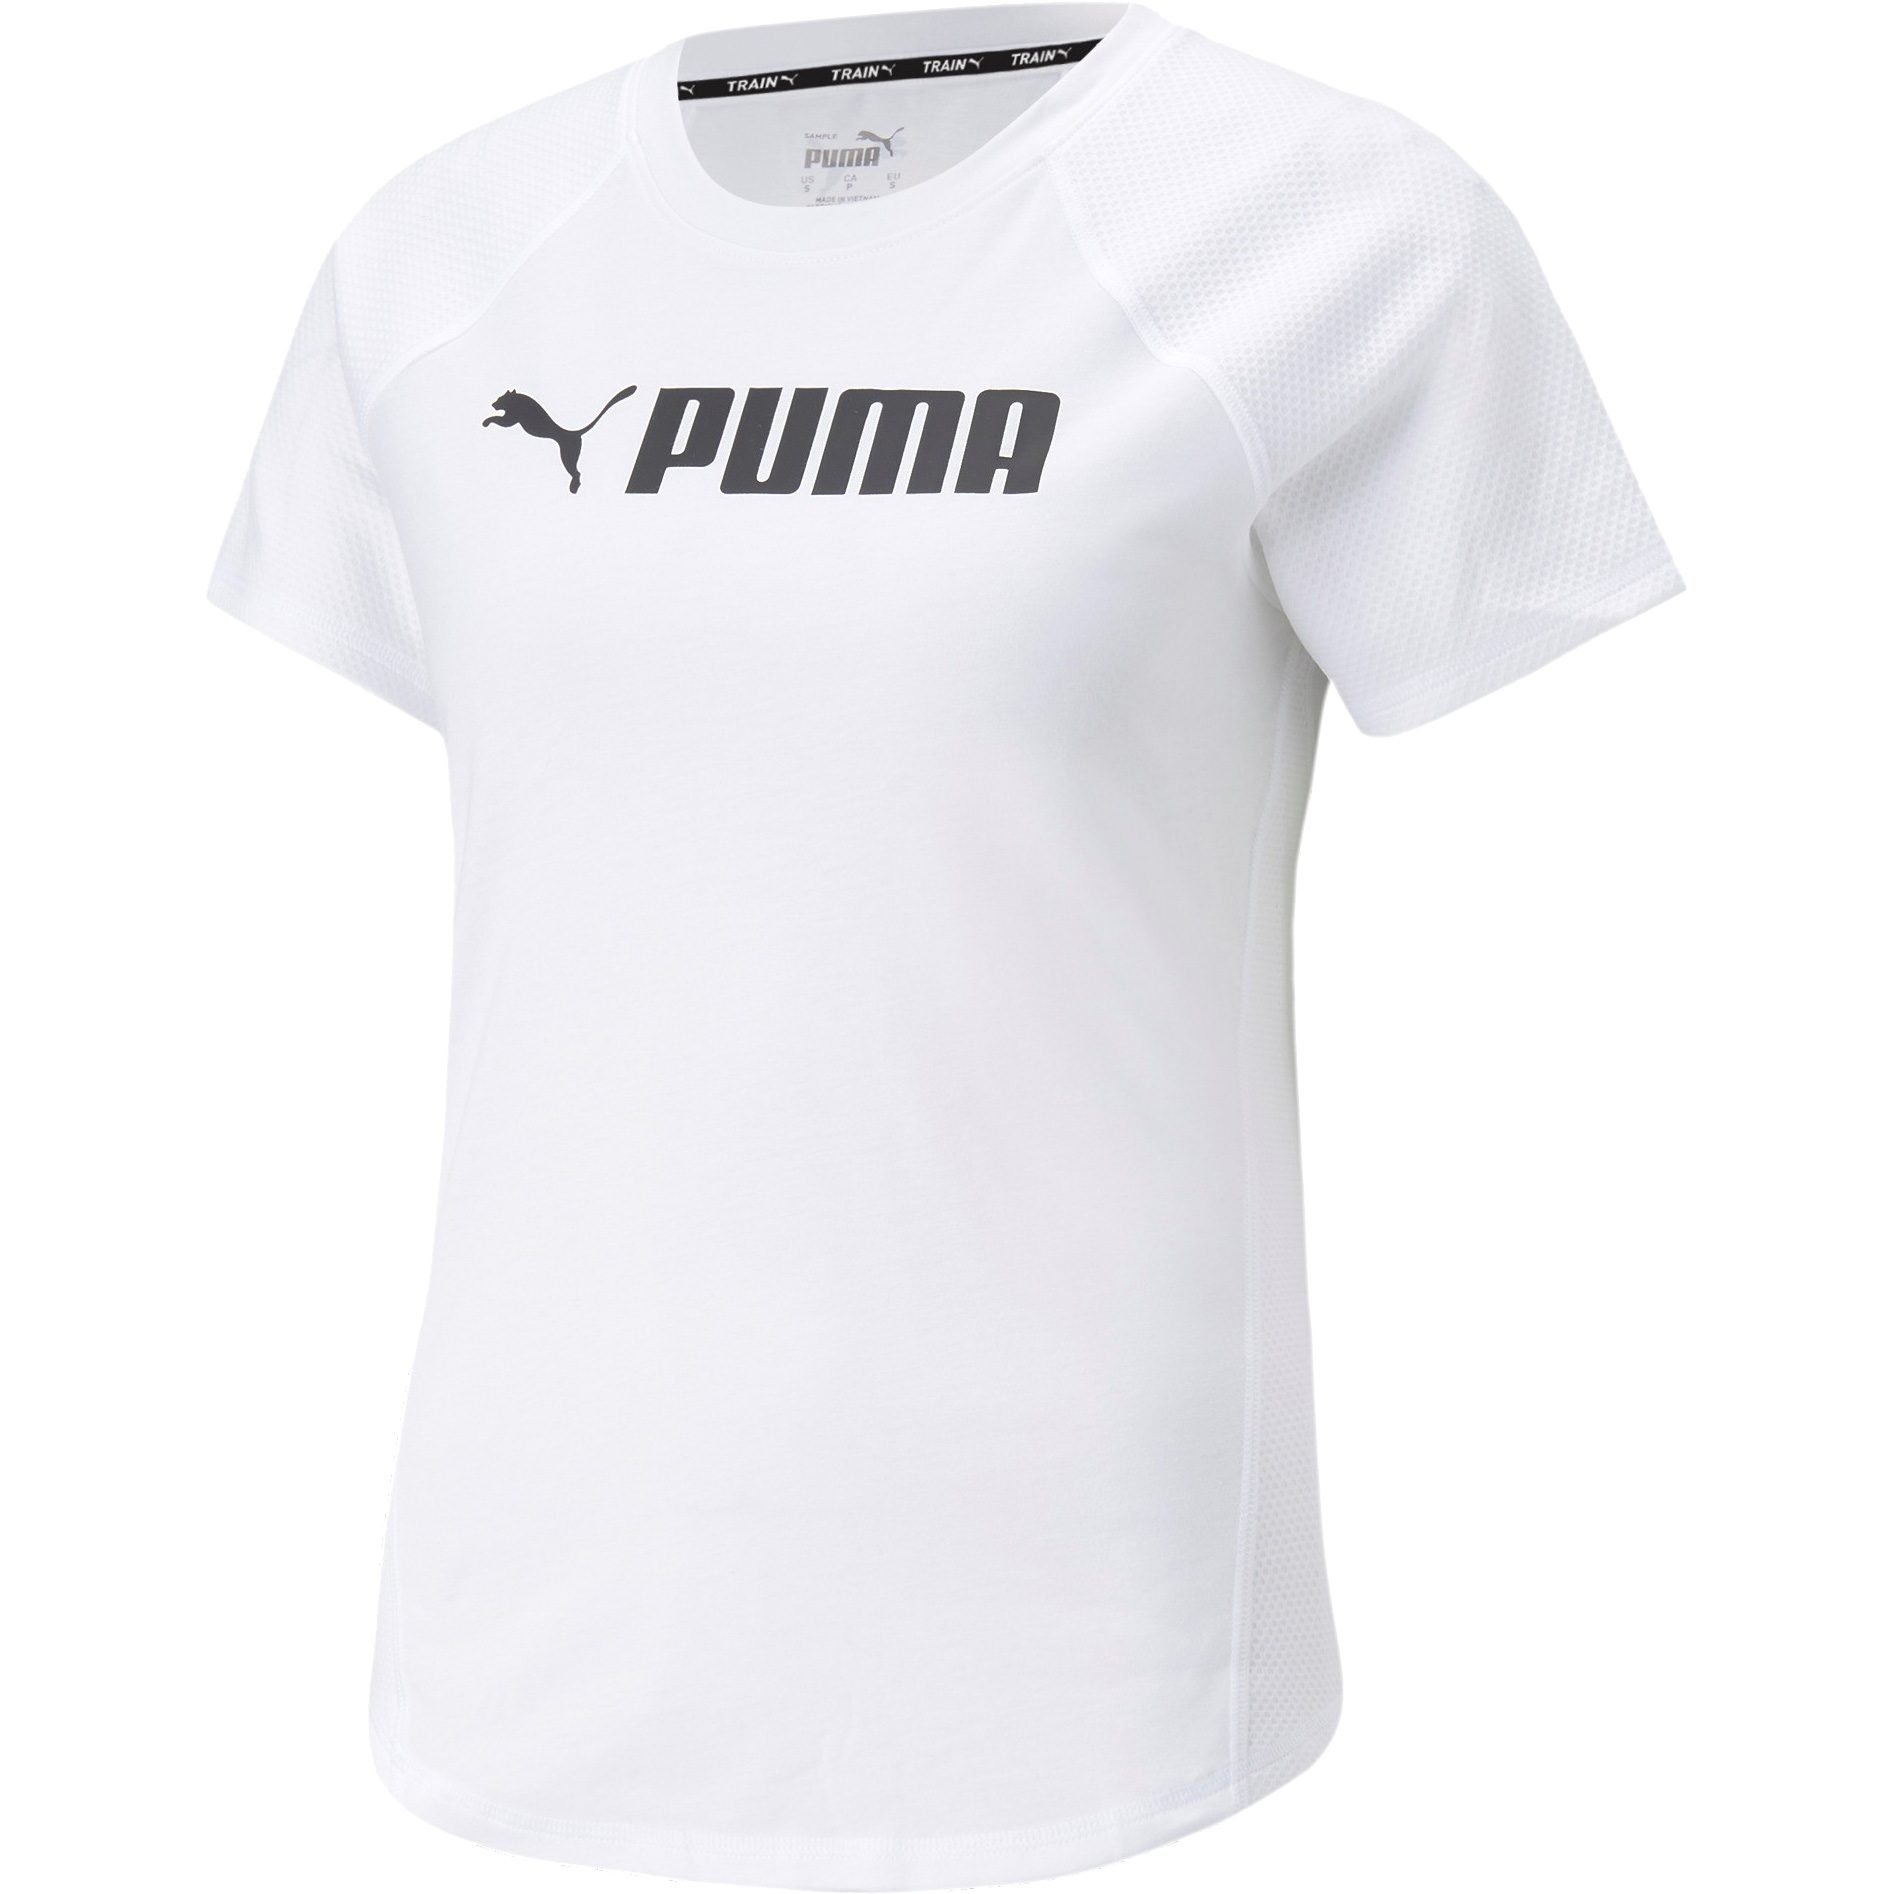 Puma - Sport Bittl T-Shirt Shop white at puma Fit Logo Women